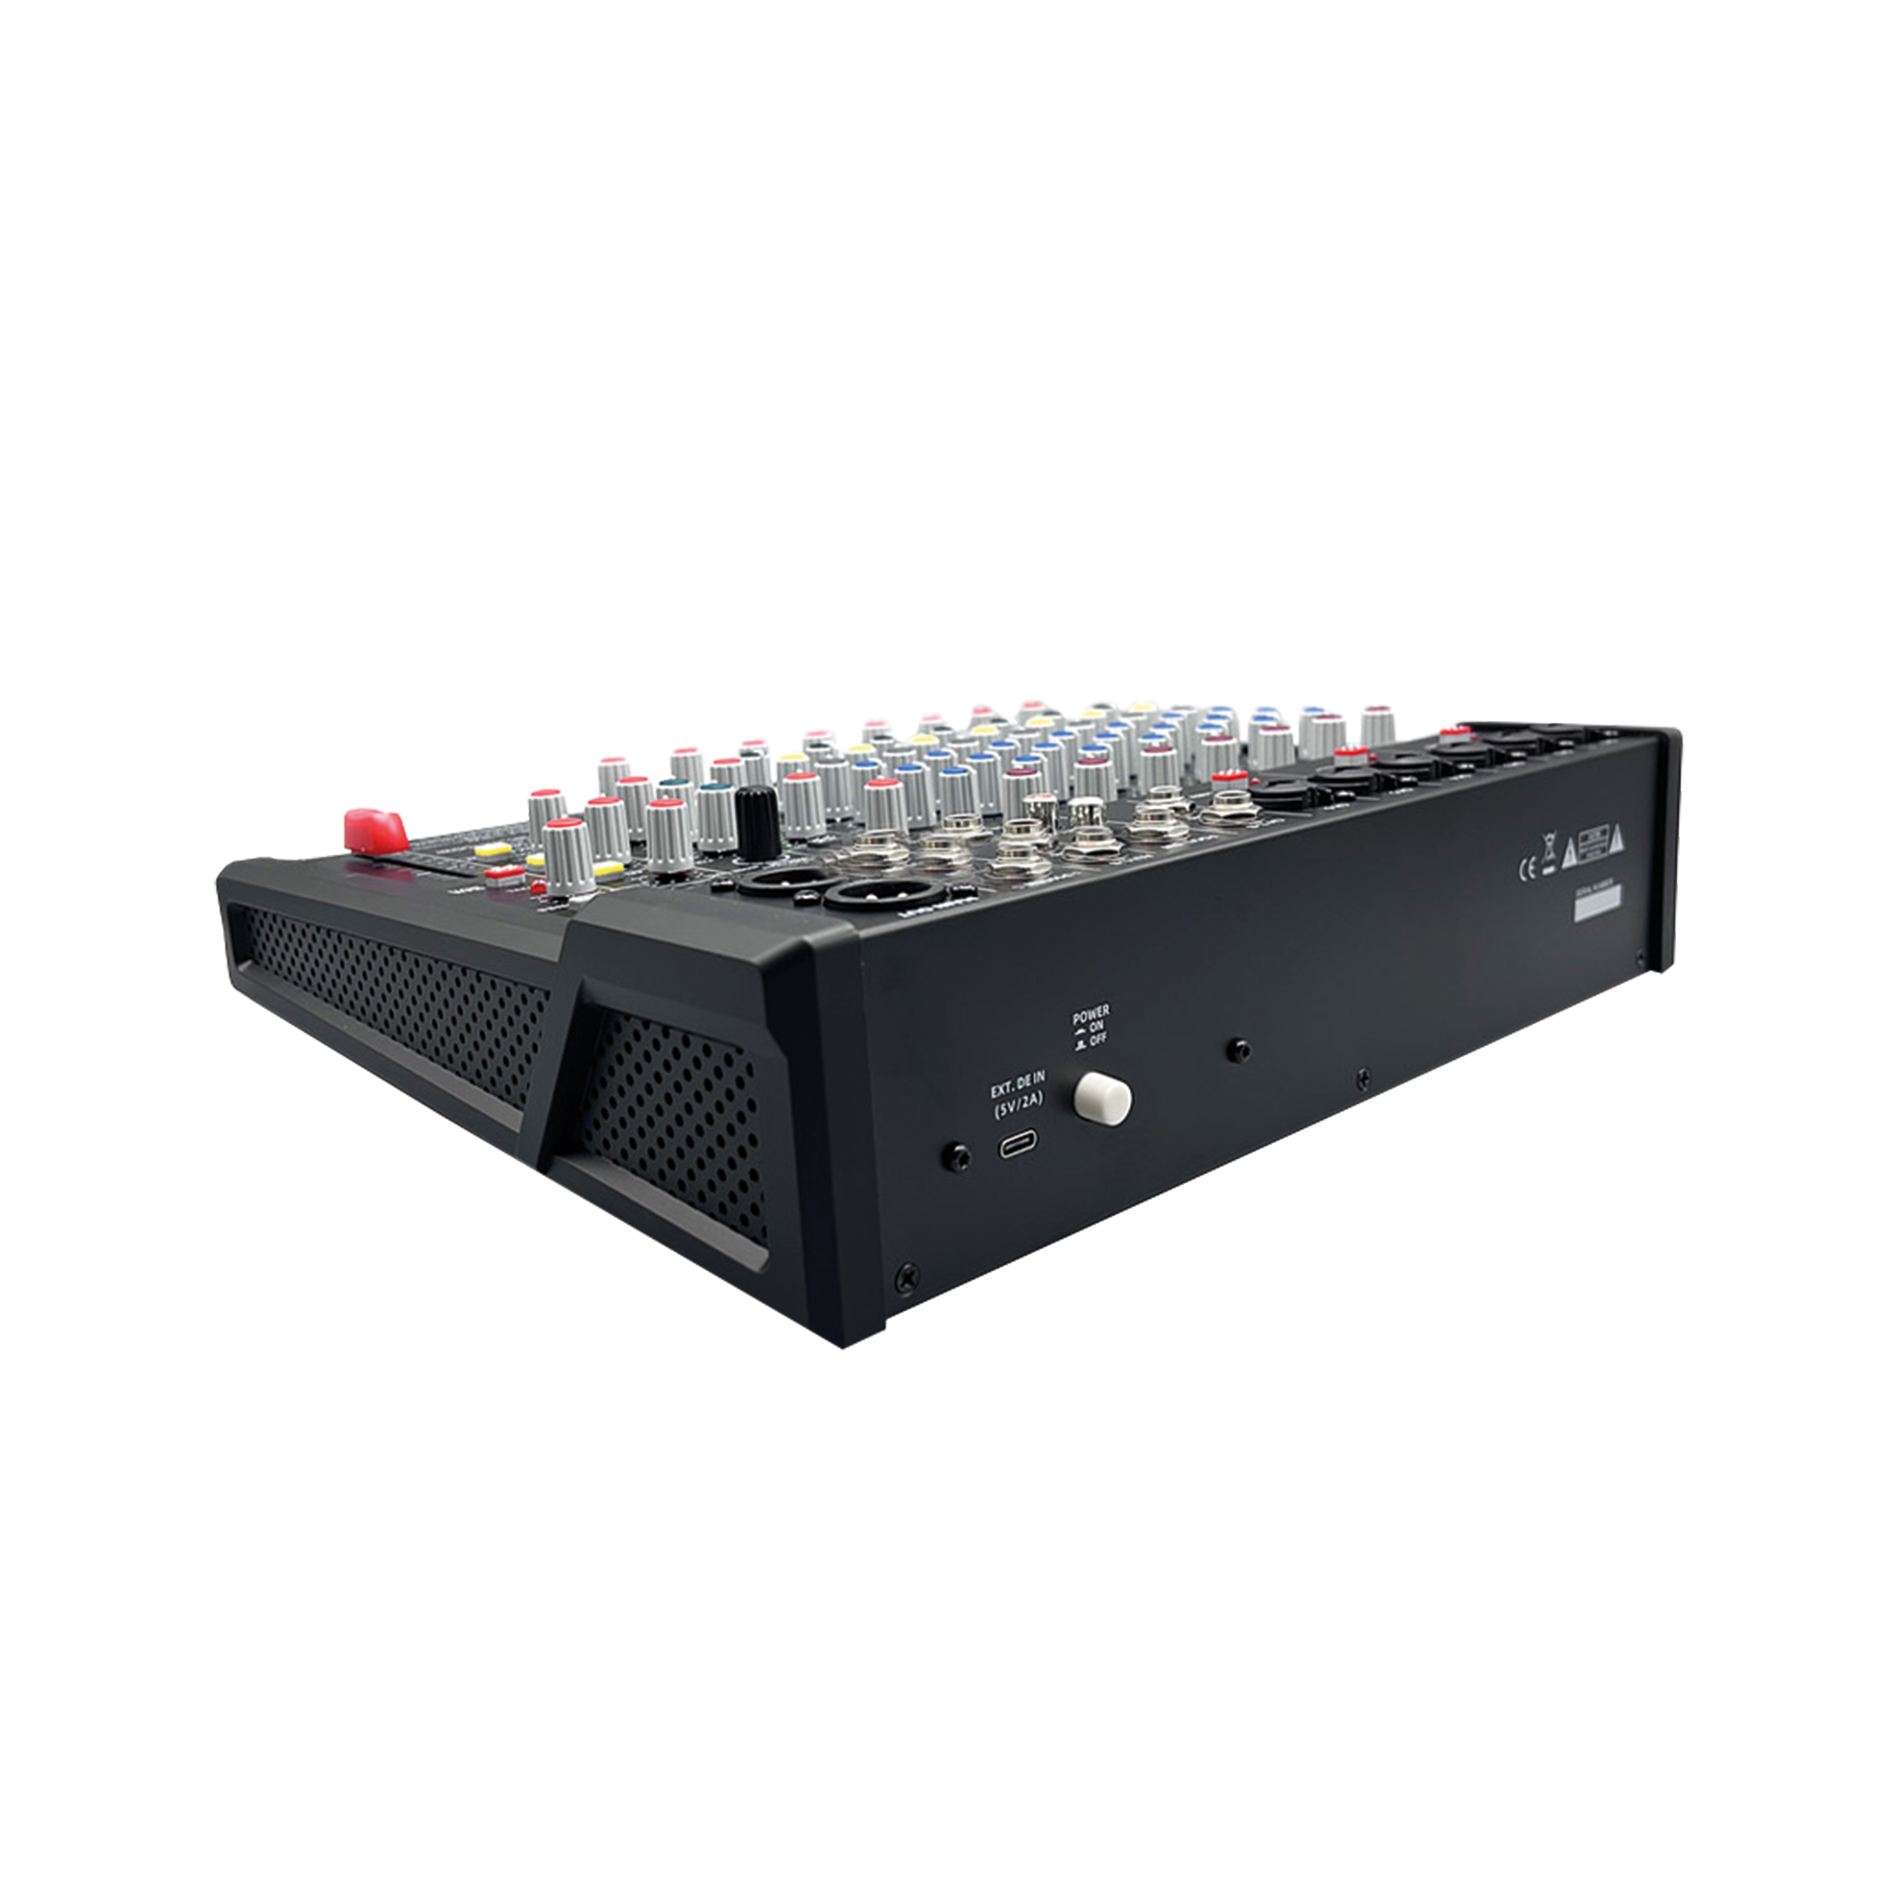 Definitive Audio Tm 633 Bu-dsp - Analog mixing desk - Variation 4